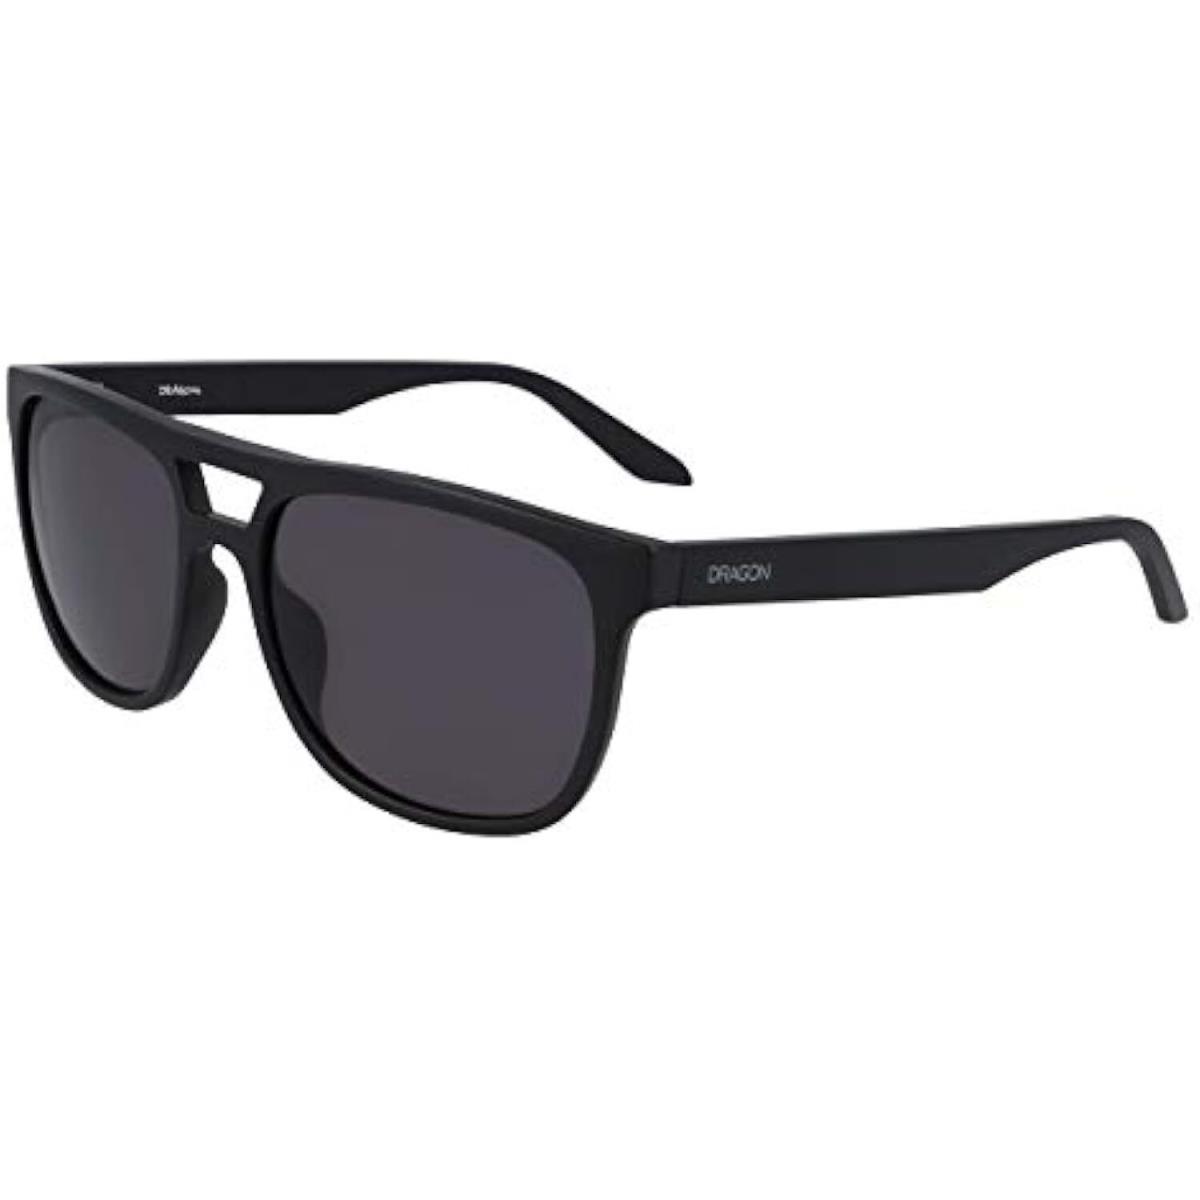 Dragon DR Cove LL 002 Matte Black Sunglasses with Smoke Luma Lenses 56mm